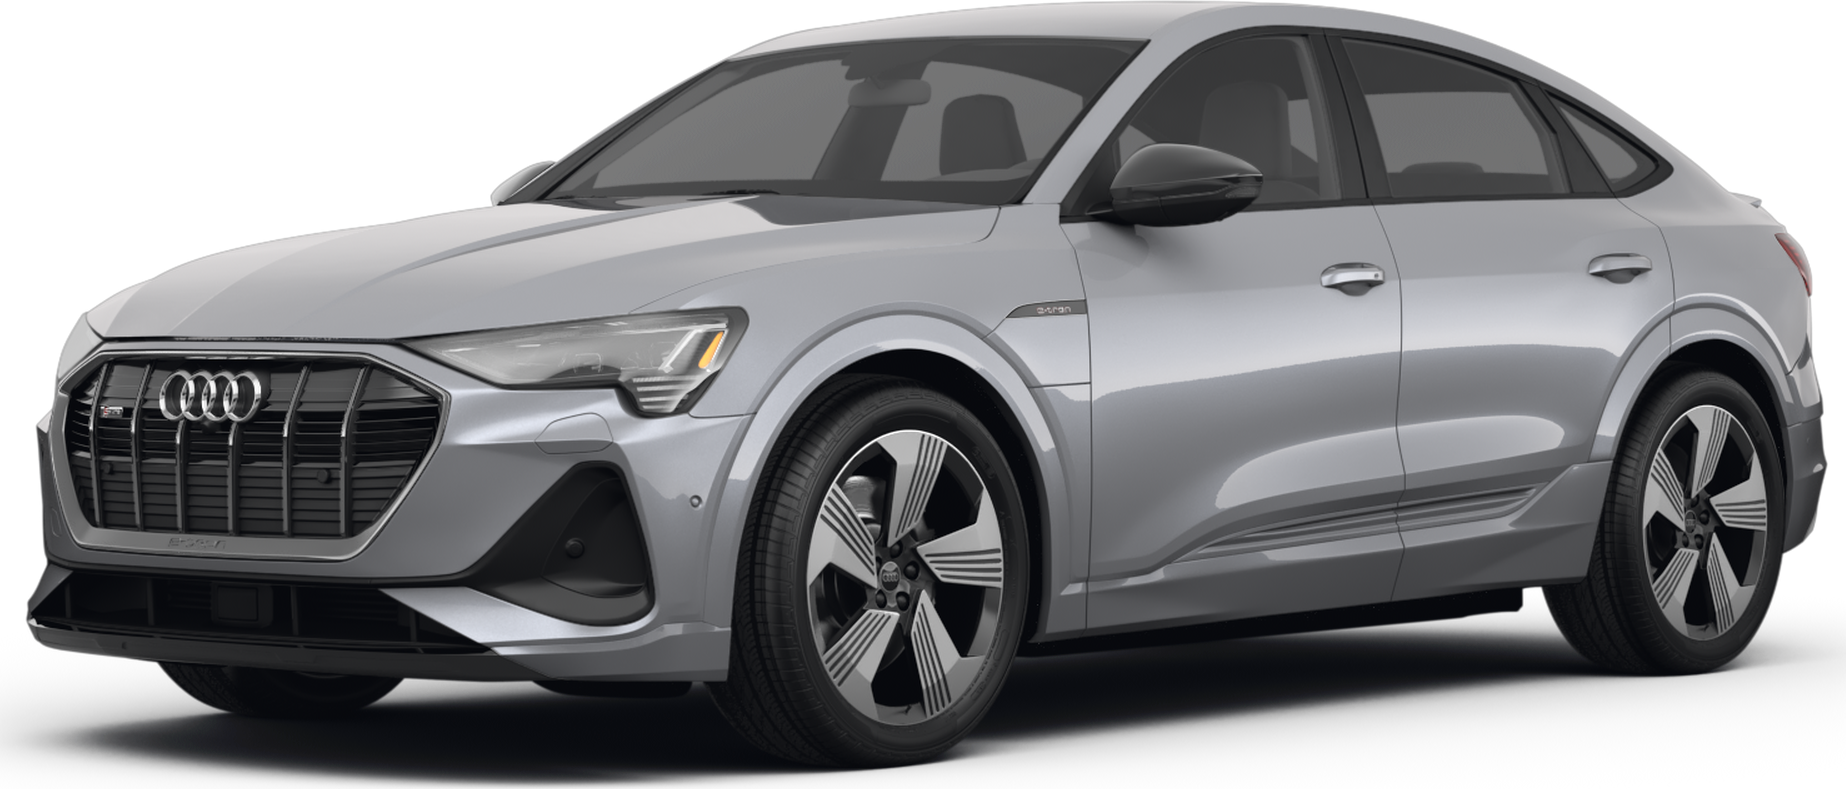 2022 Audi A7 PHEV Gets Bigger Battery, Few More EPA EV Miles